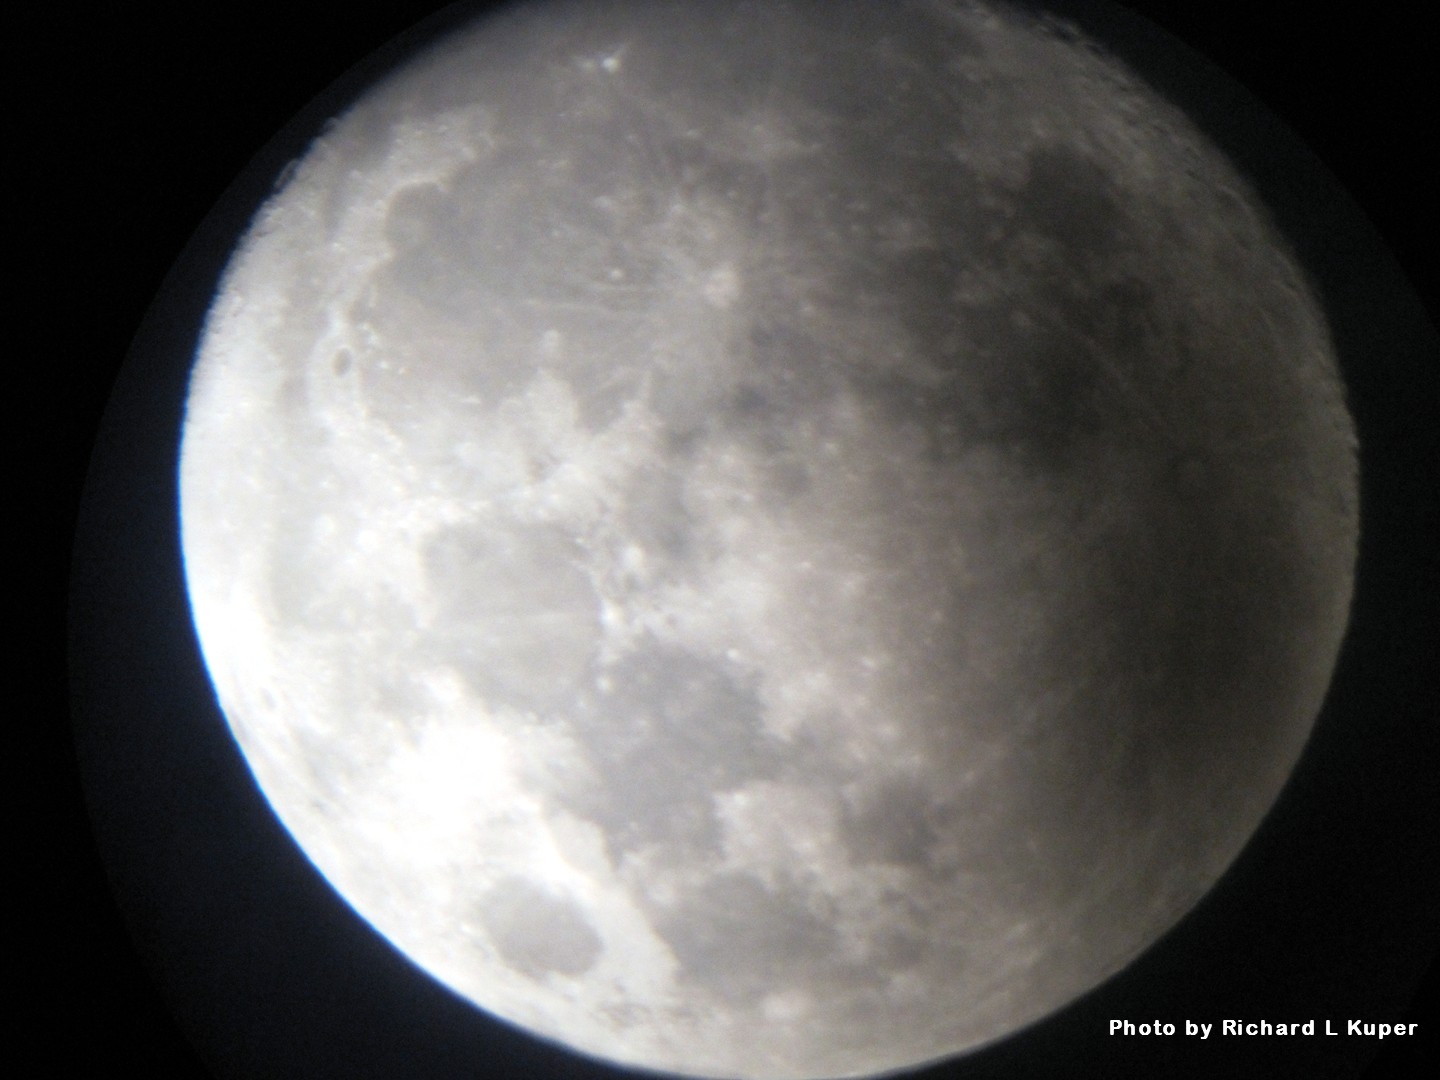 moon photo by Richard L Kuper